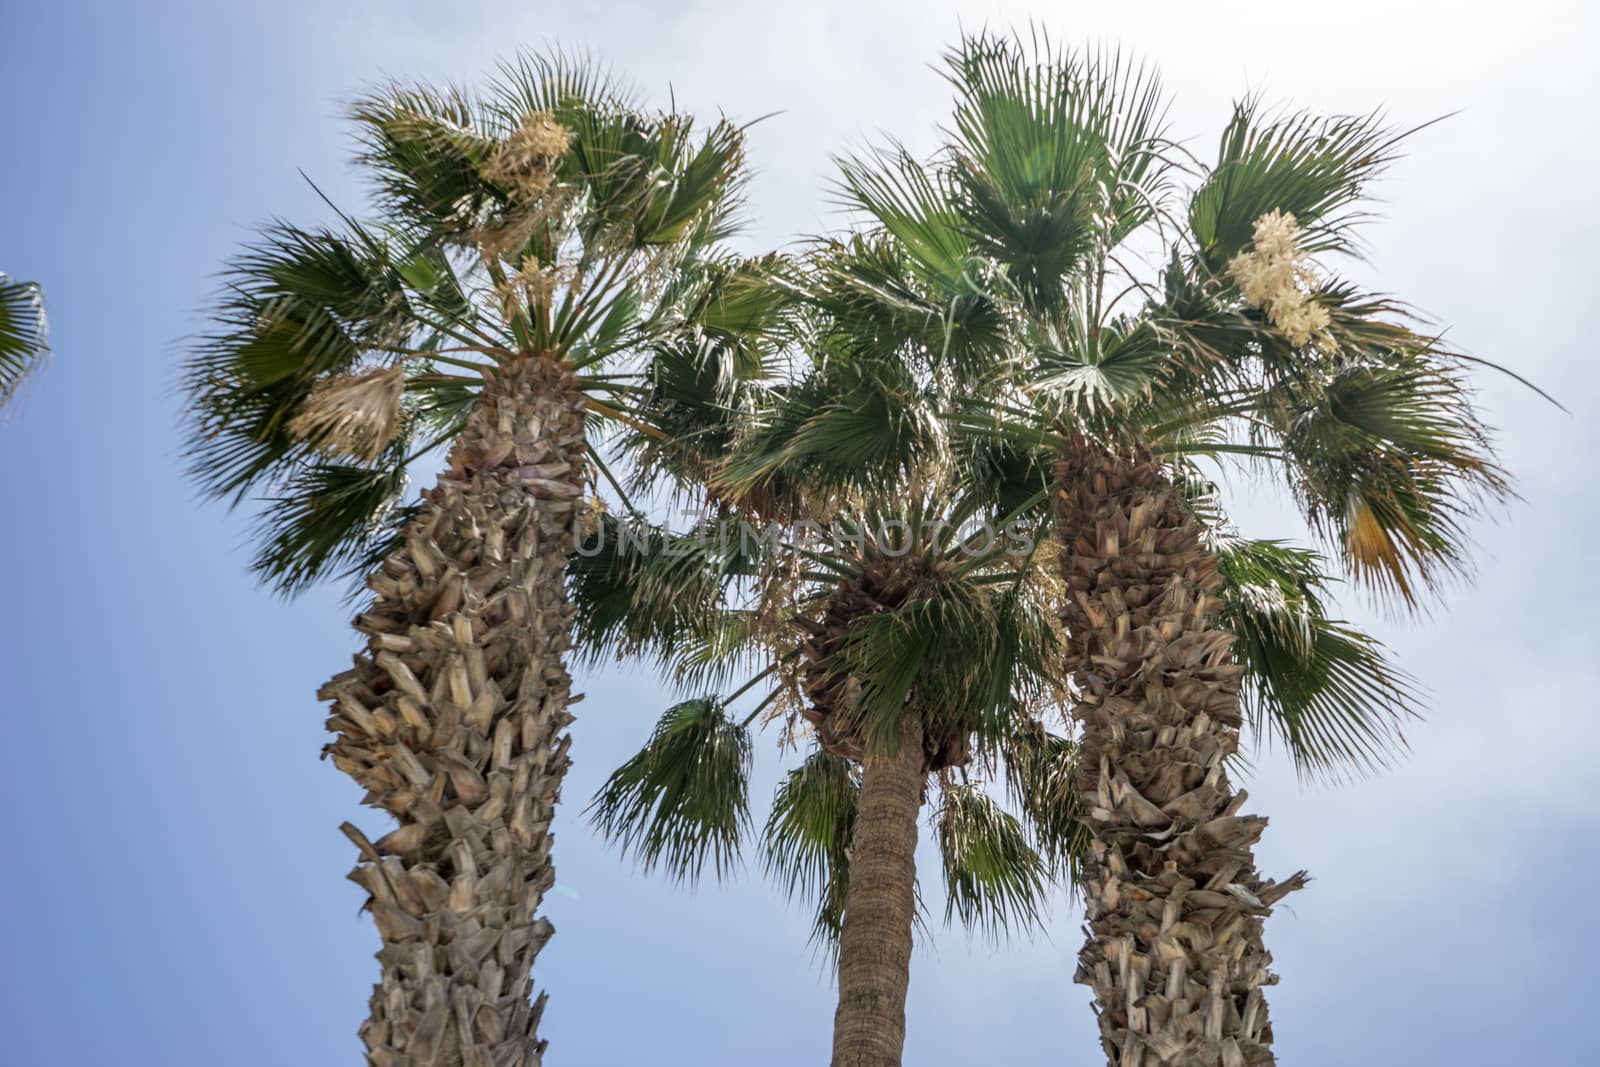 Tall palm trees along the Malagueta beach in Malaga, Spain, Europe on a cloudy morning